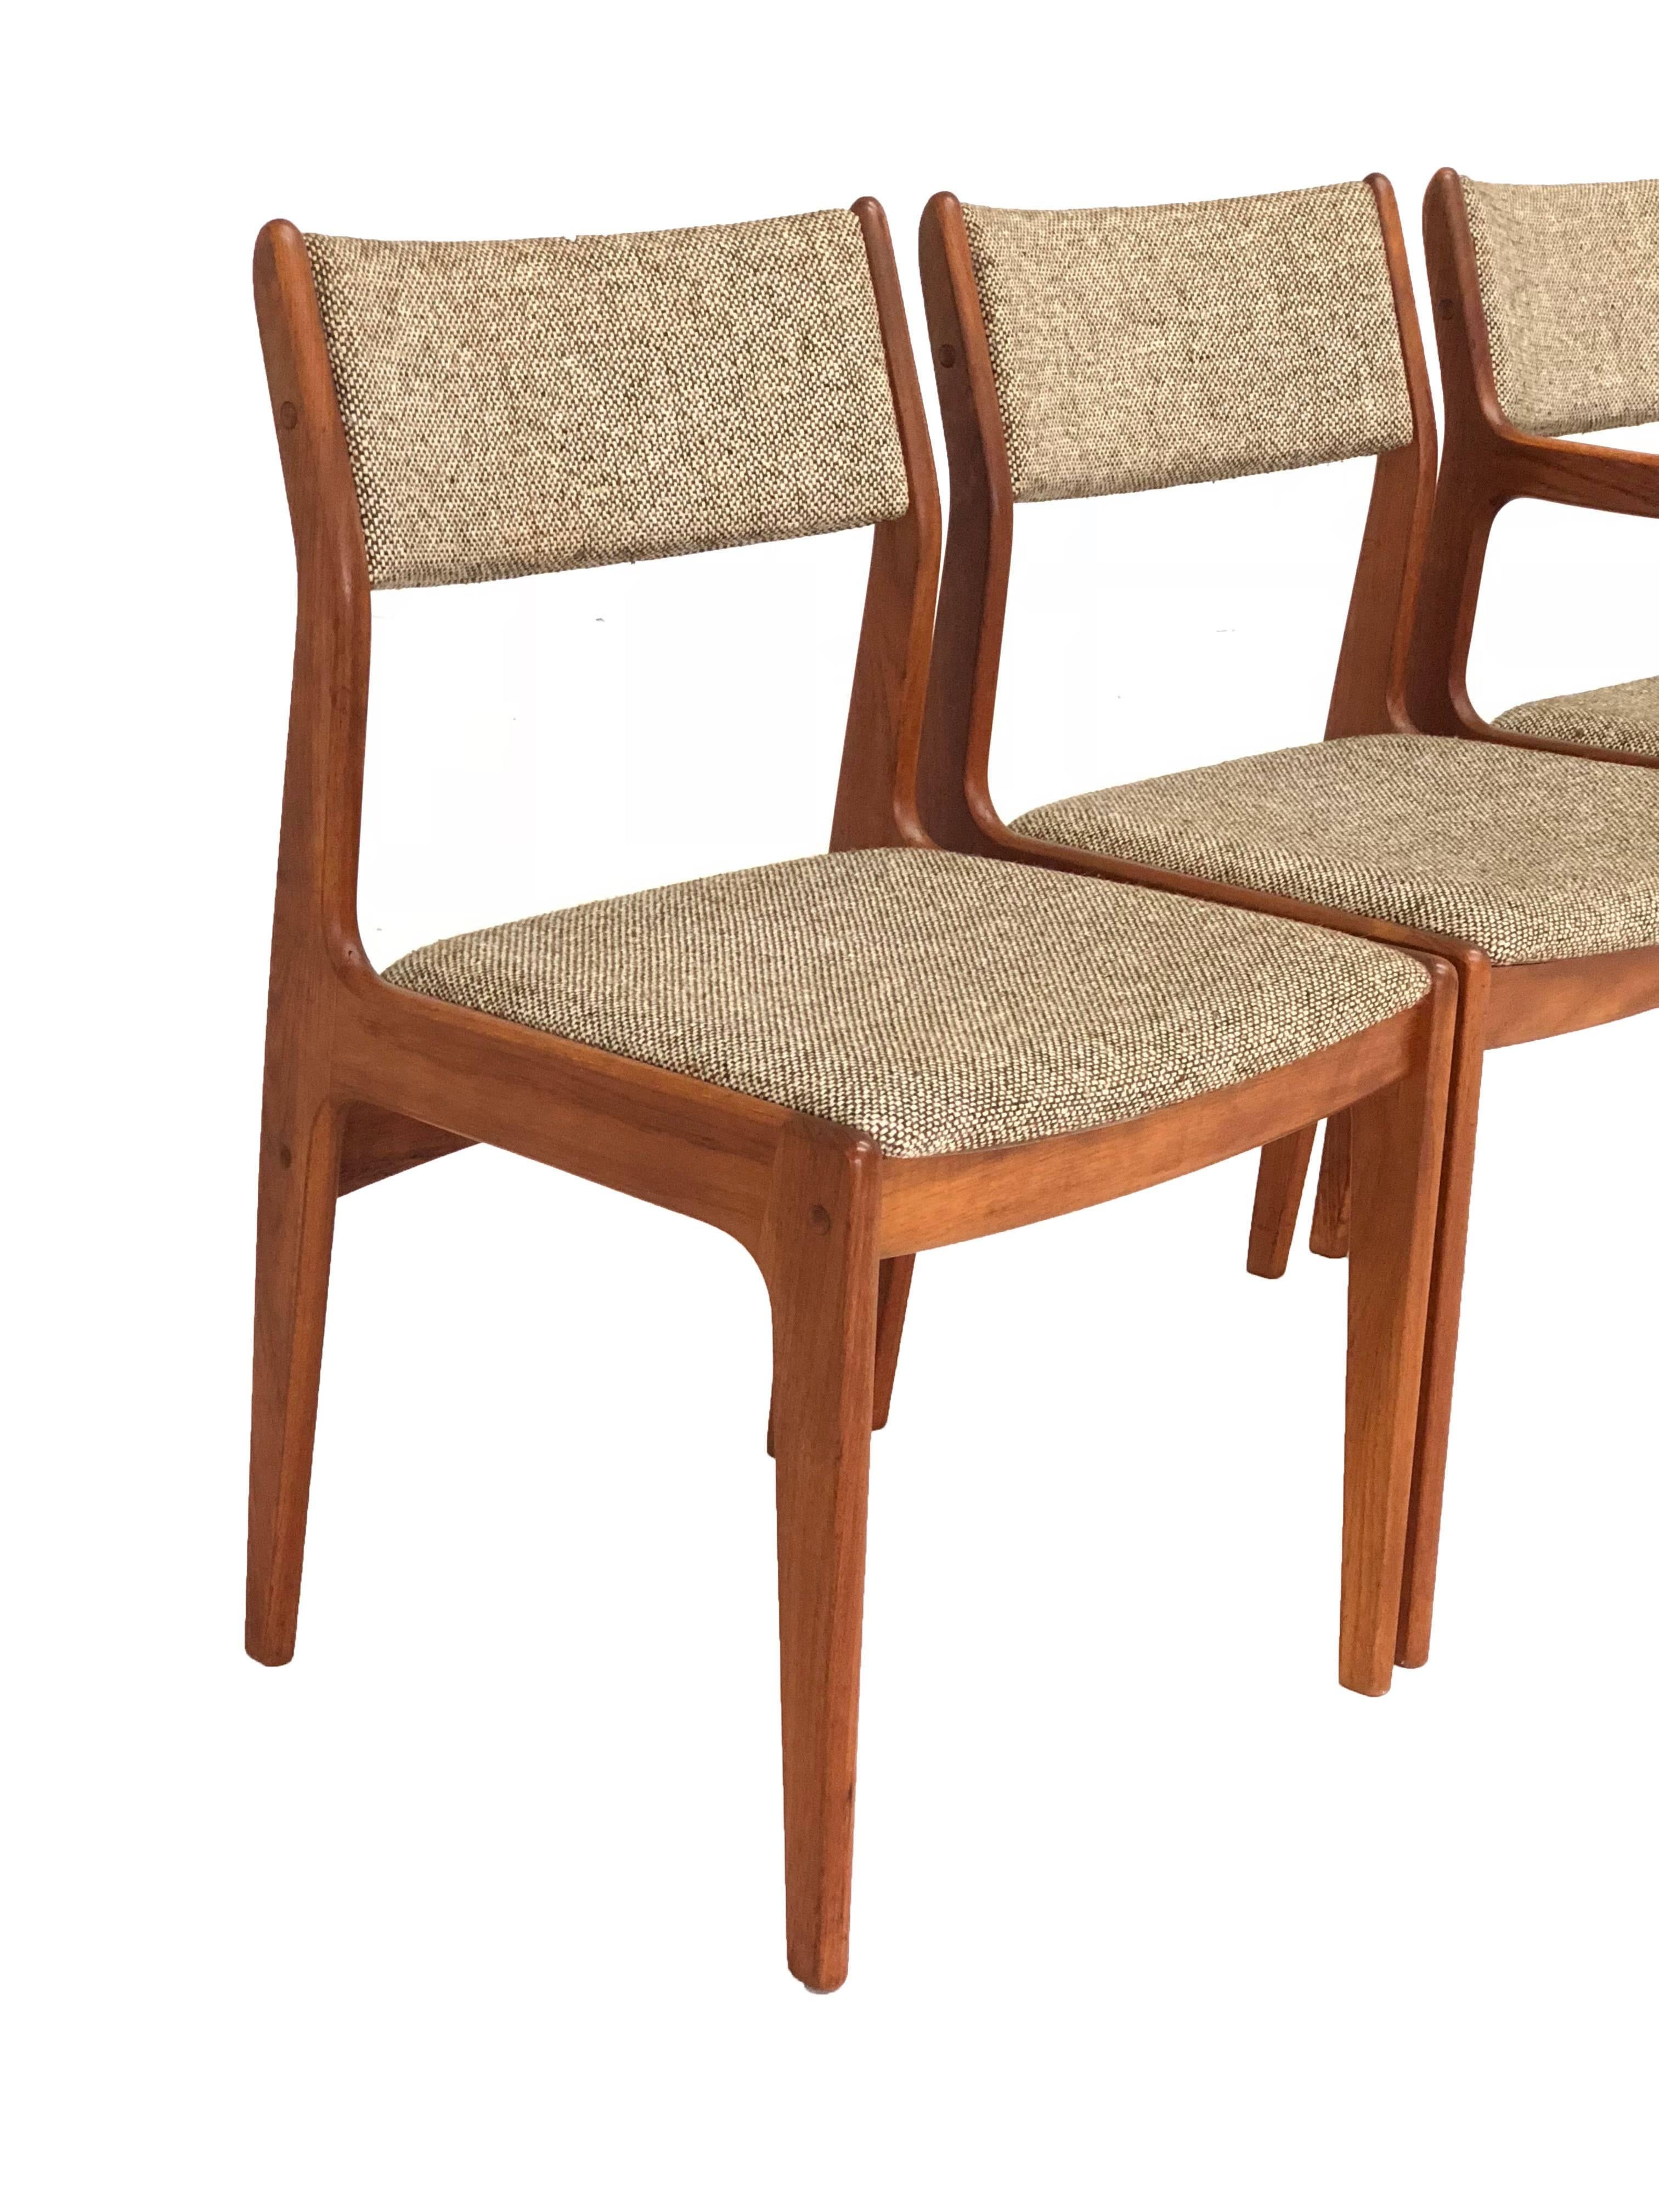 Mid-Century Modern Teak Dining Chairs 1